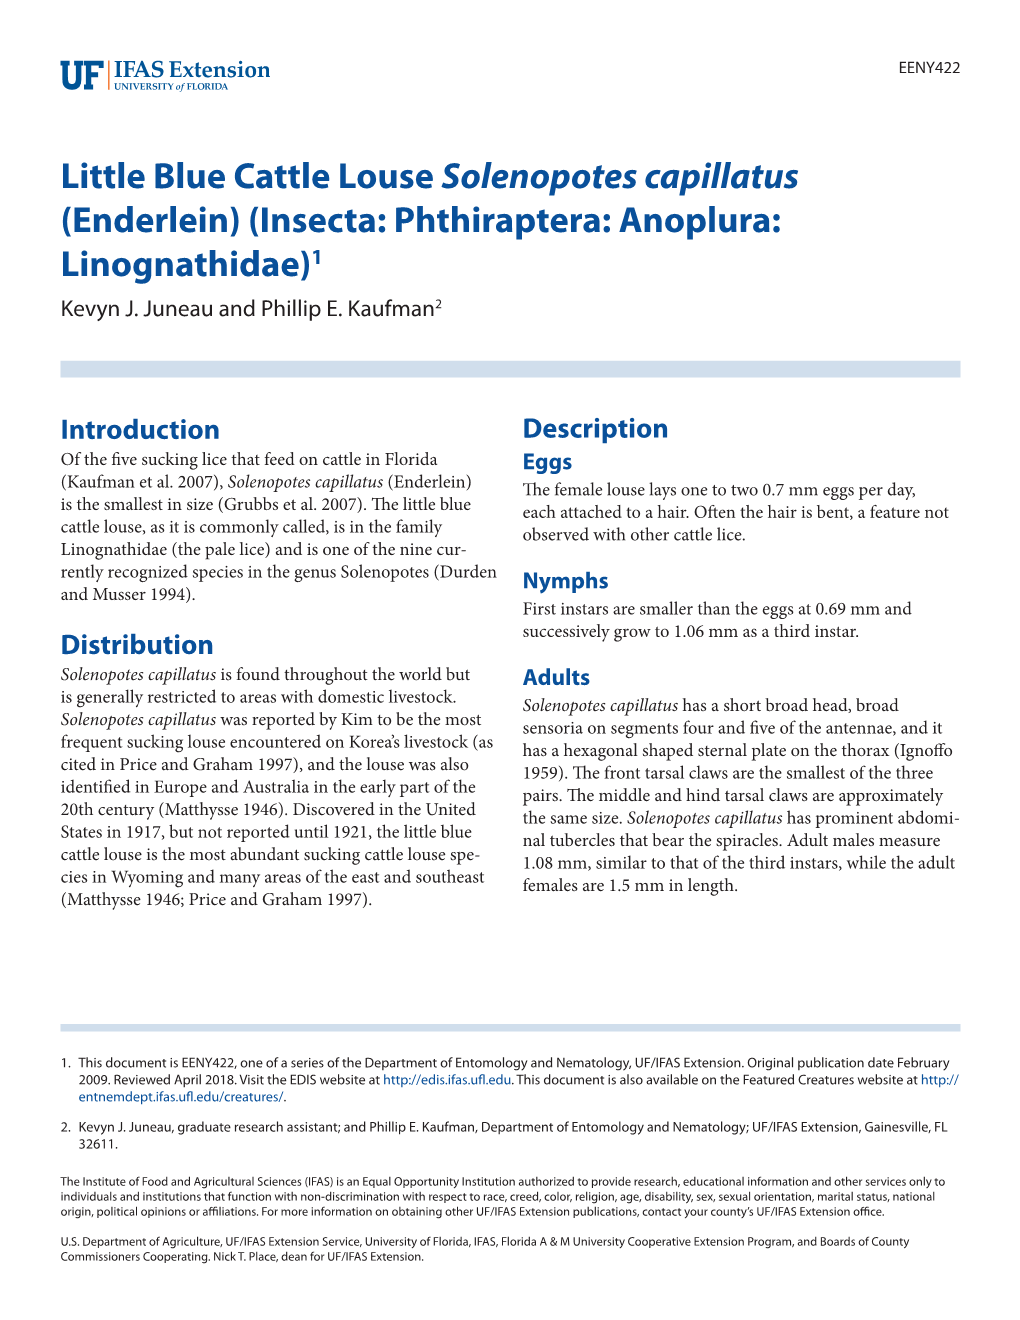 Little Blue Cattle Louse Solenopotes Capillatus (Enderlein) (Insecta: Phthiraptera: Anoplura: Linognathidae)1 Kevyn J